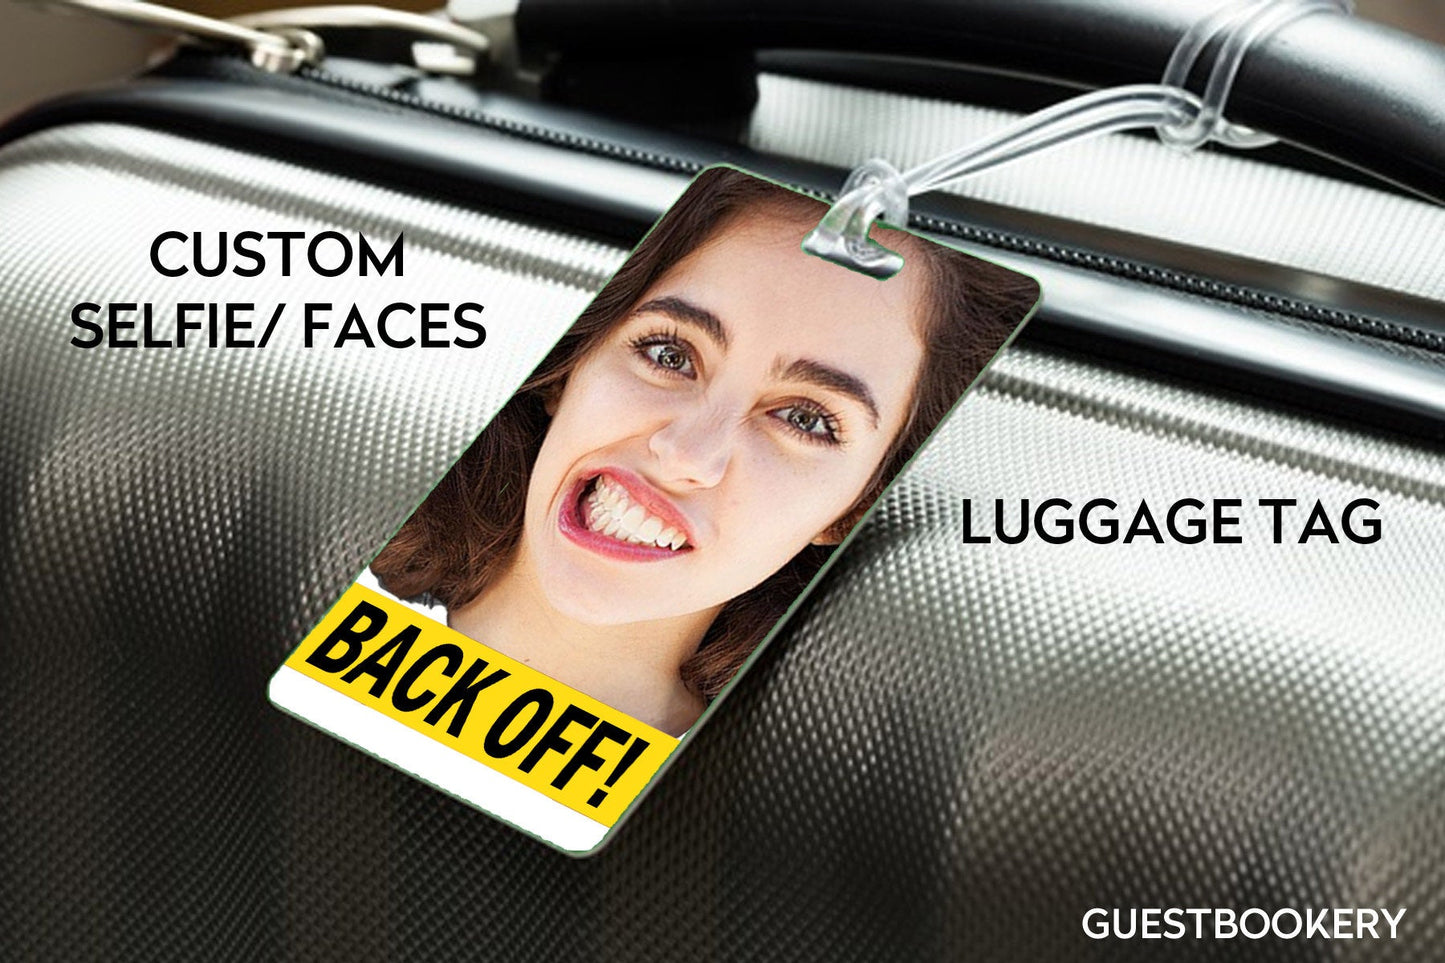 Custom Face Luggage Tag - Back Off